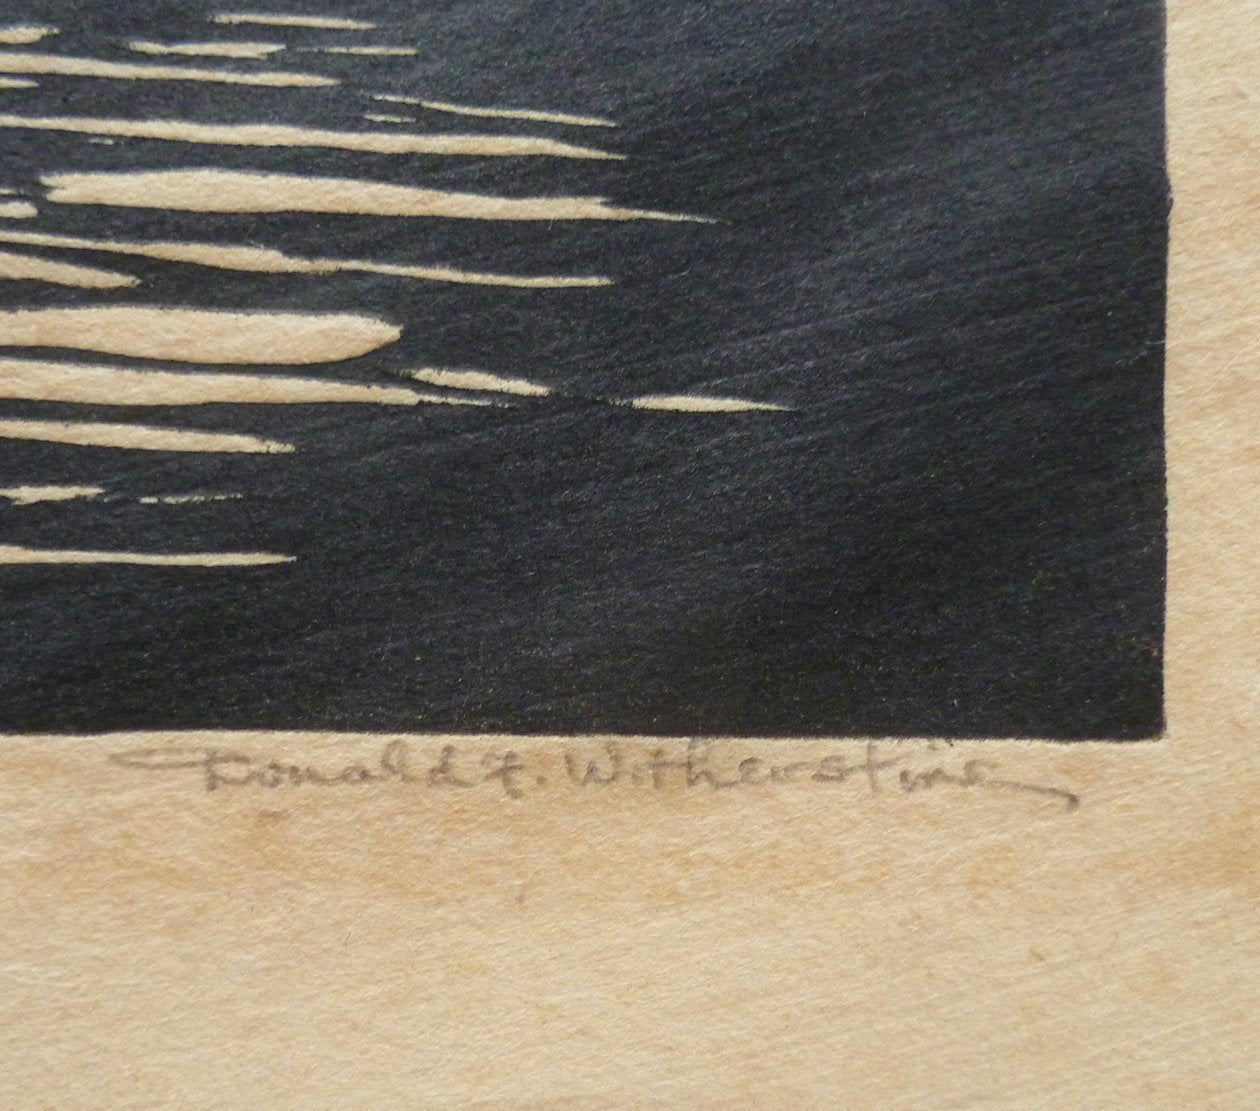 Donald Witherstine Black and White Woodcut signature image